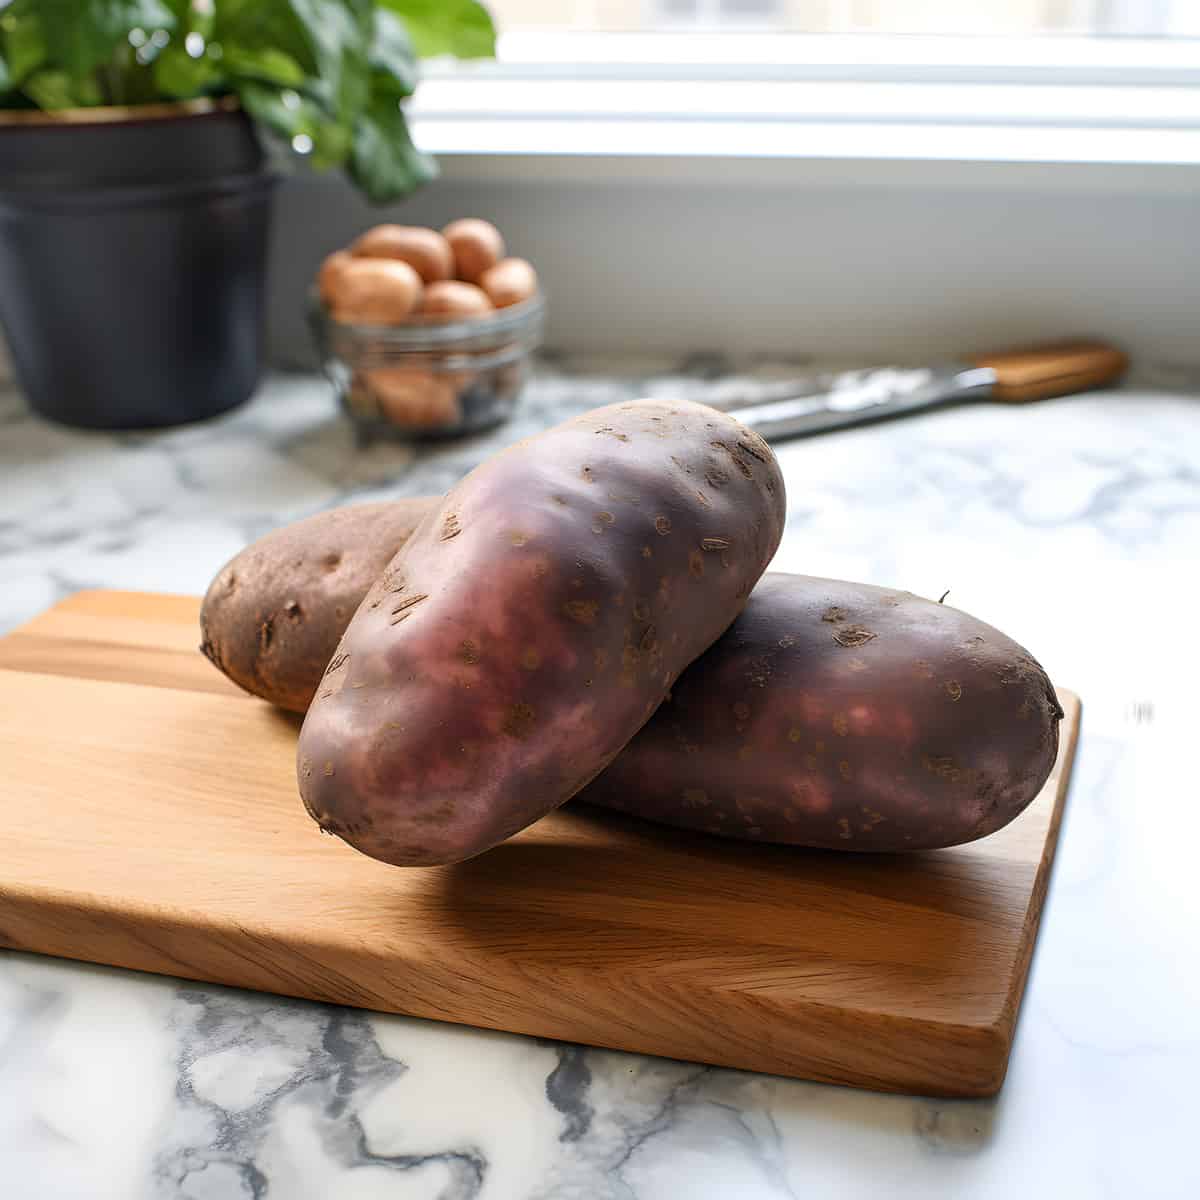 Negra Andina Potatoes on a kitchen counter